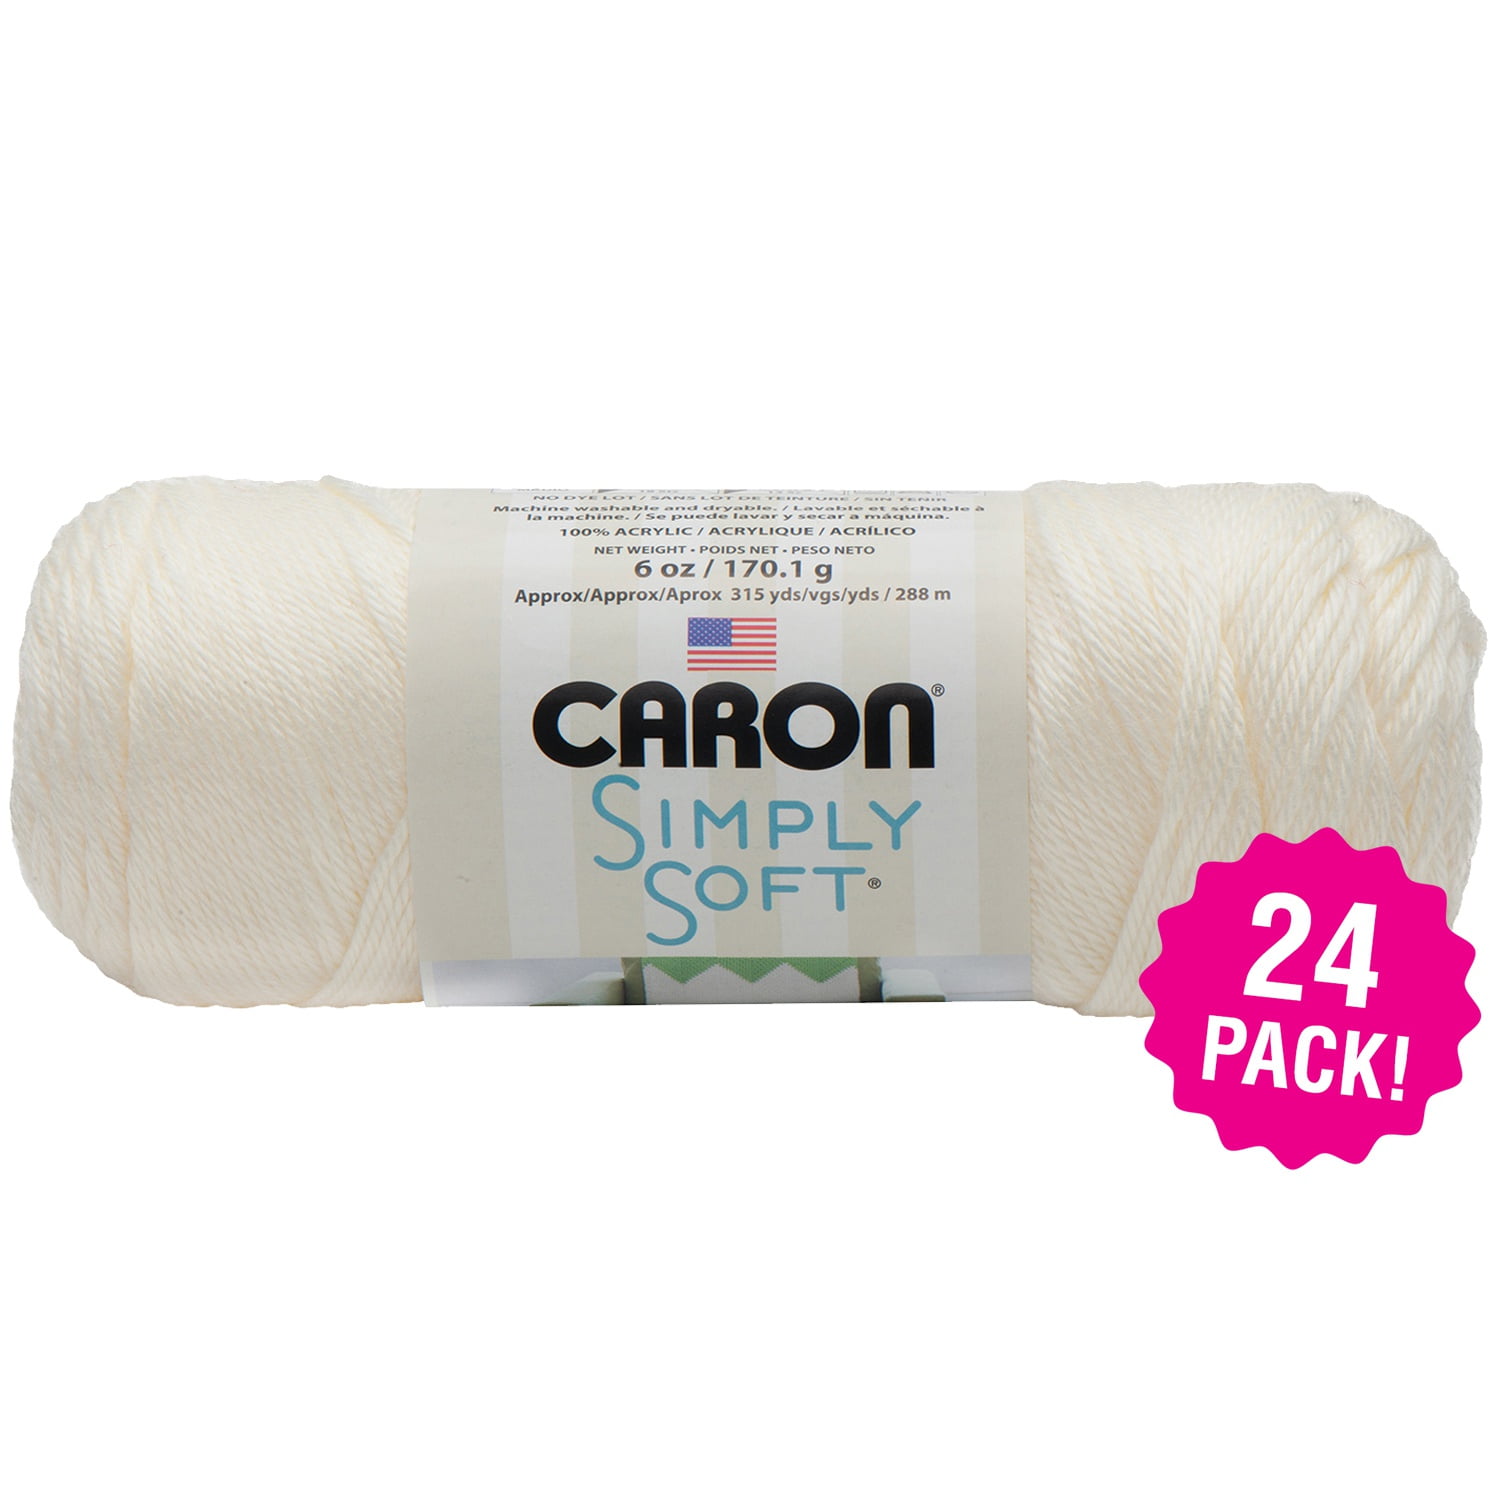 Caron Simply Soft Solids Yarn-Bone, Multipack of 3